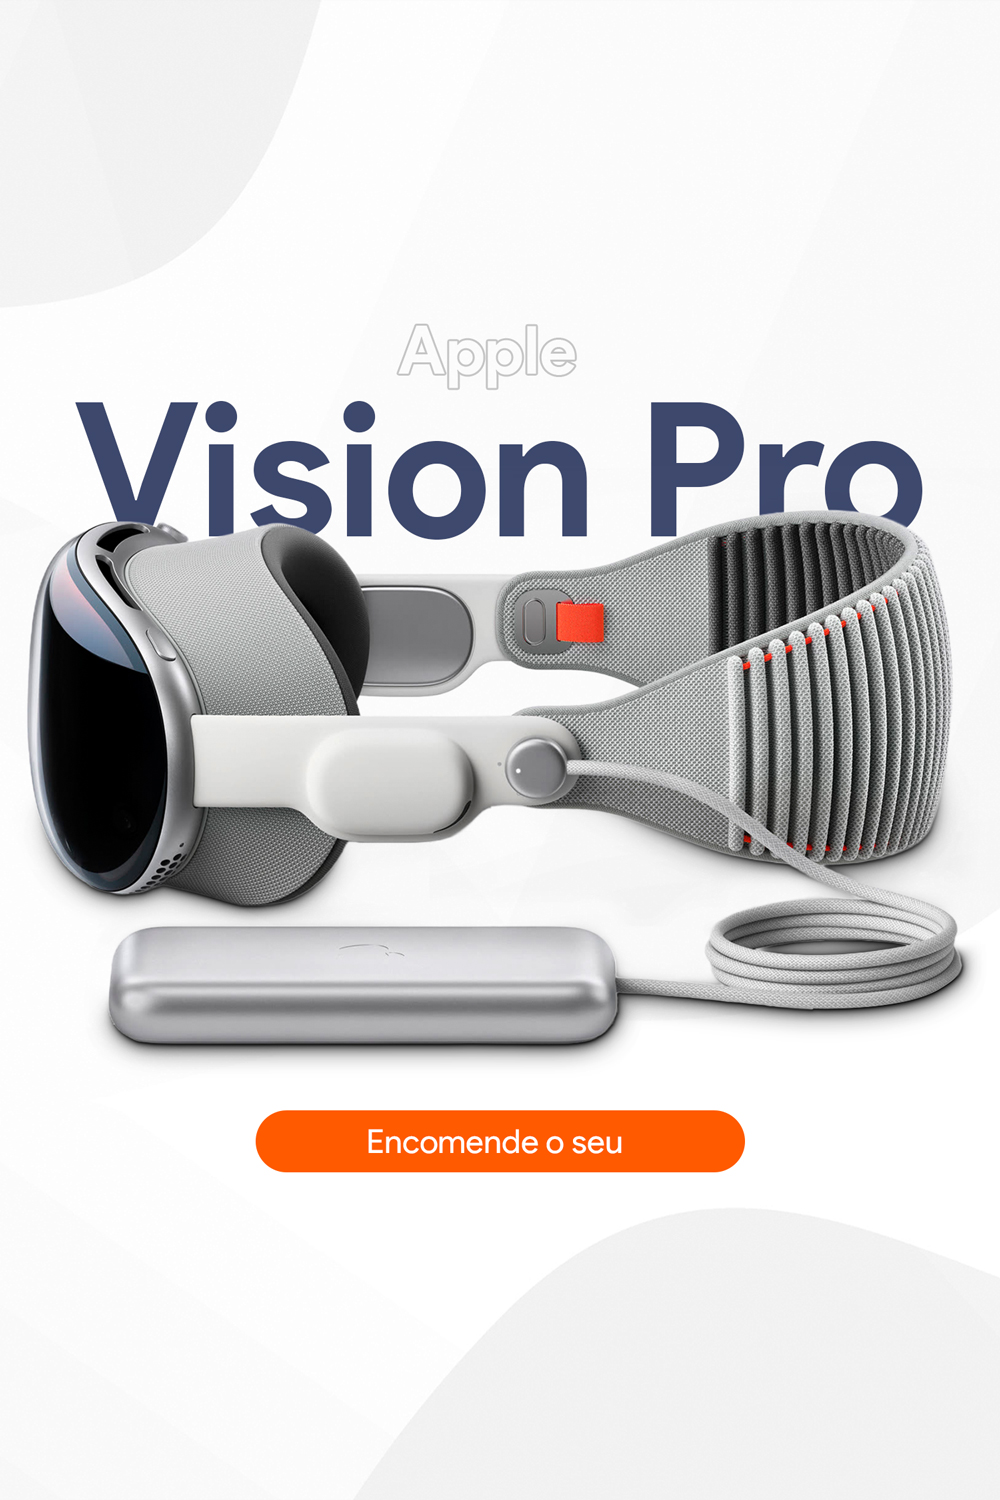 Vision Pro Apple PSD File Social Media Design Post Template pinterest preview image.